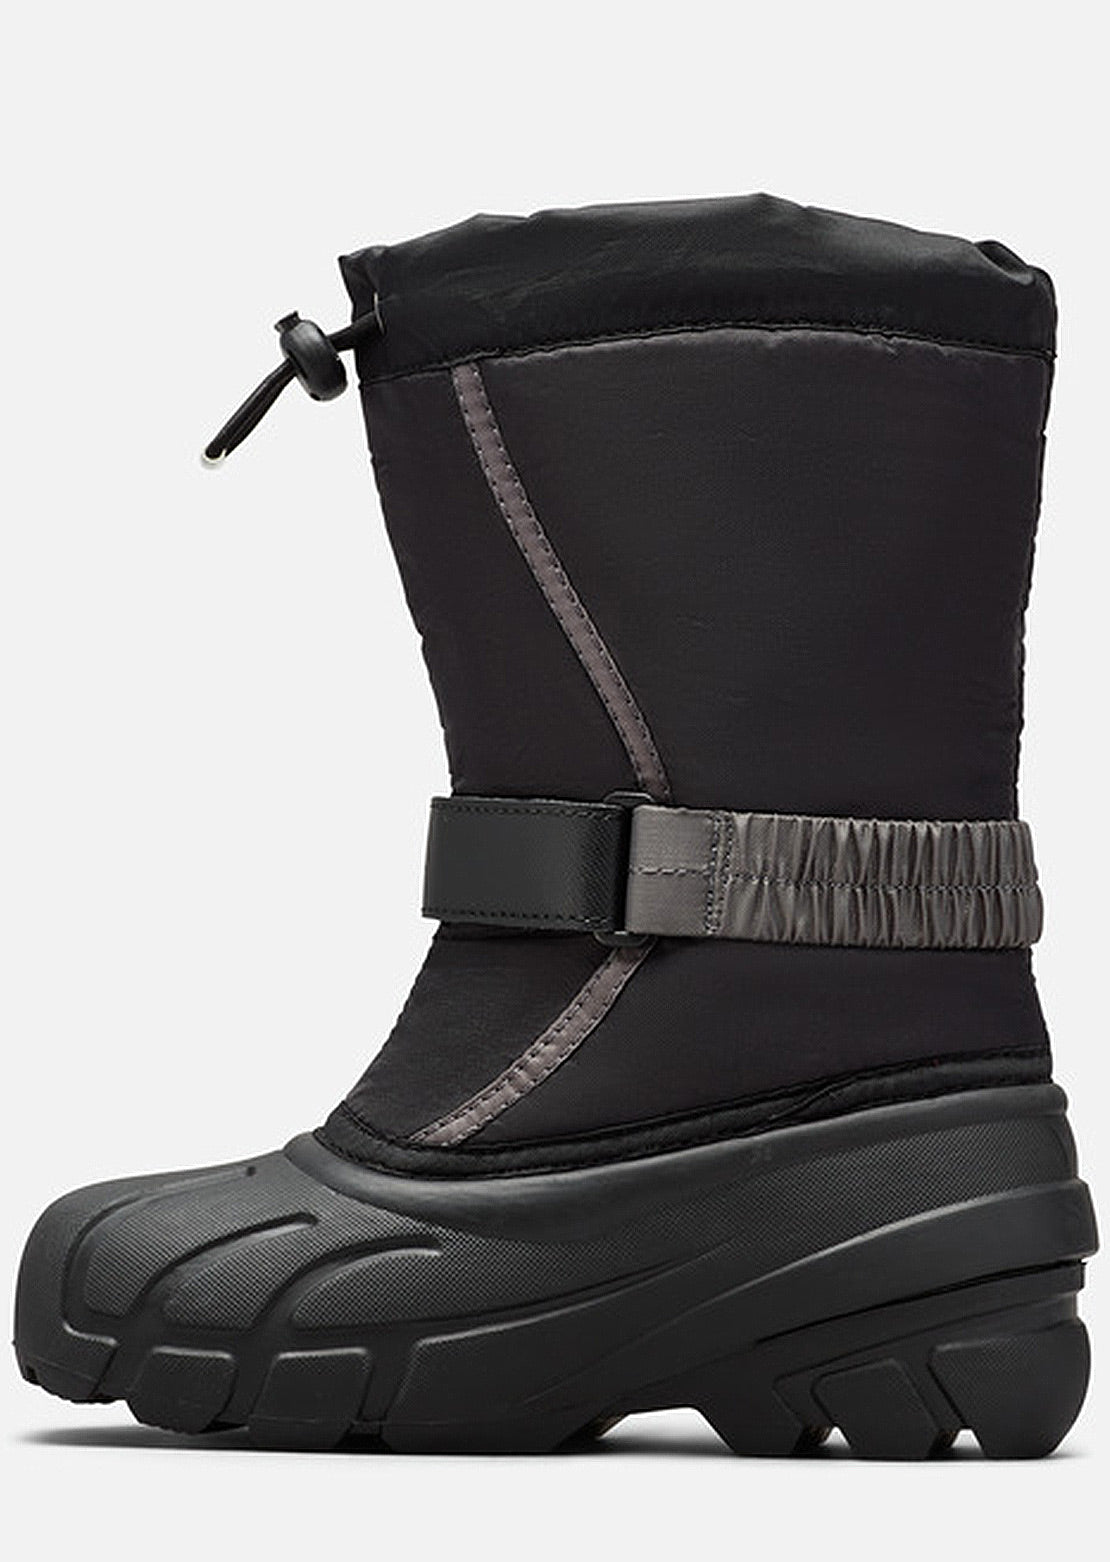 Sorel Junior Flurry Winter Boots Black/City Grey